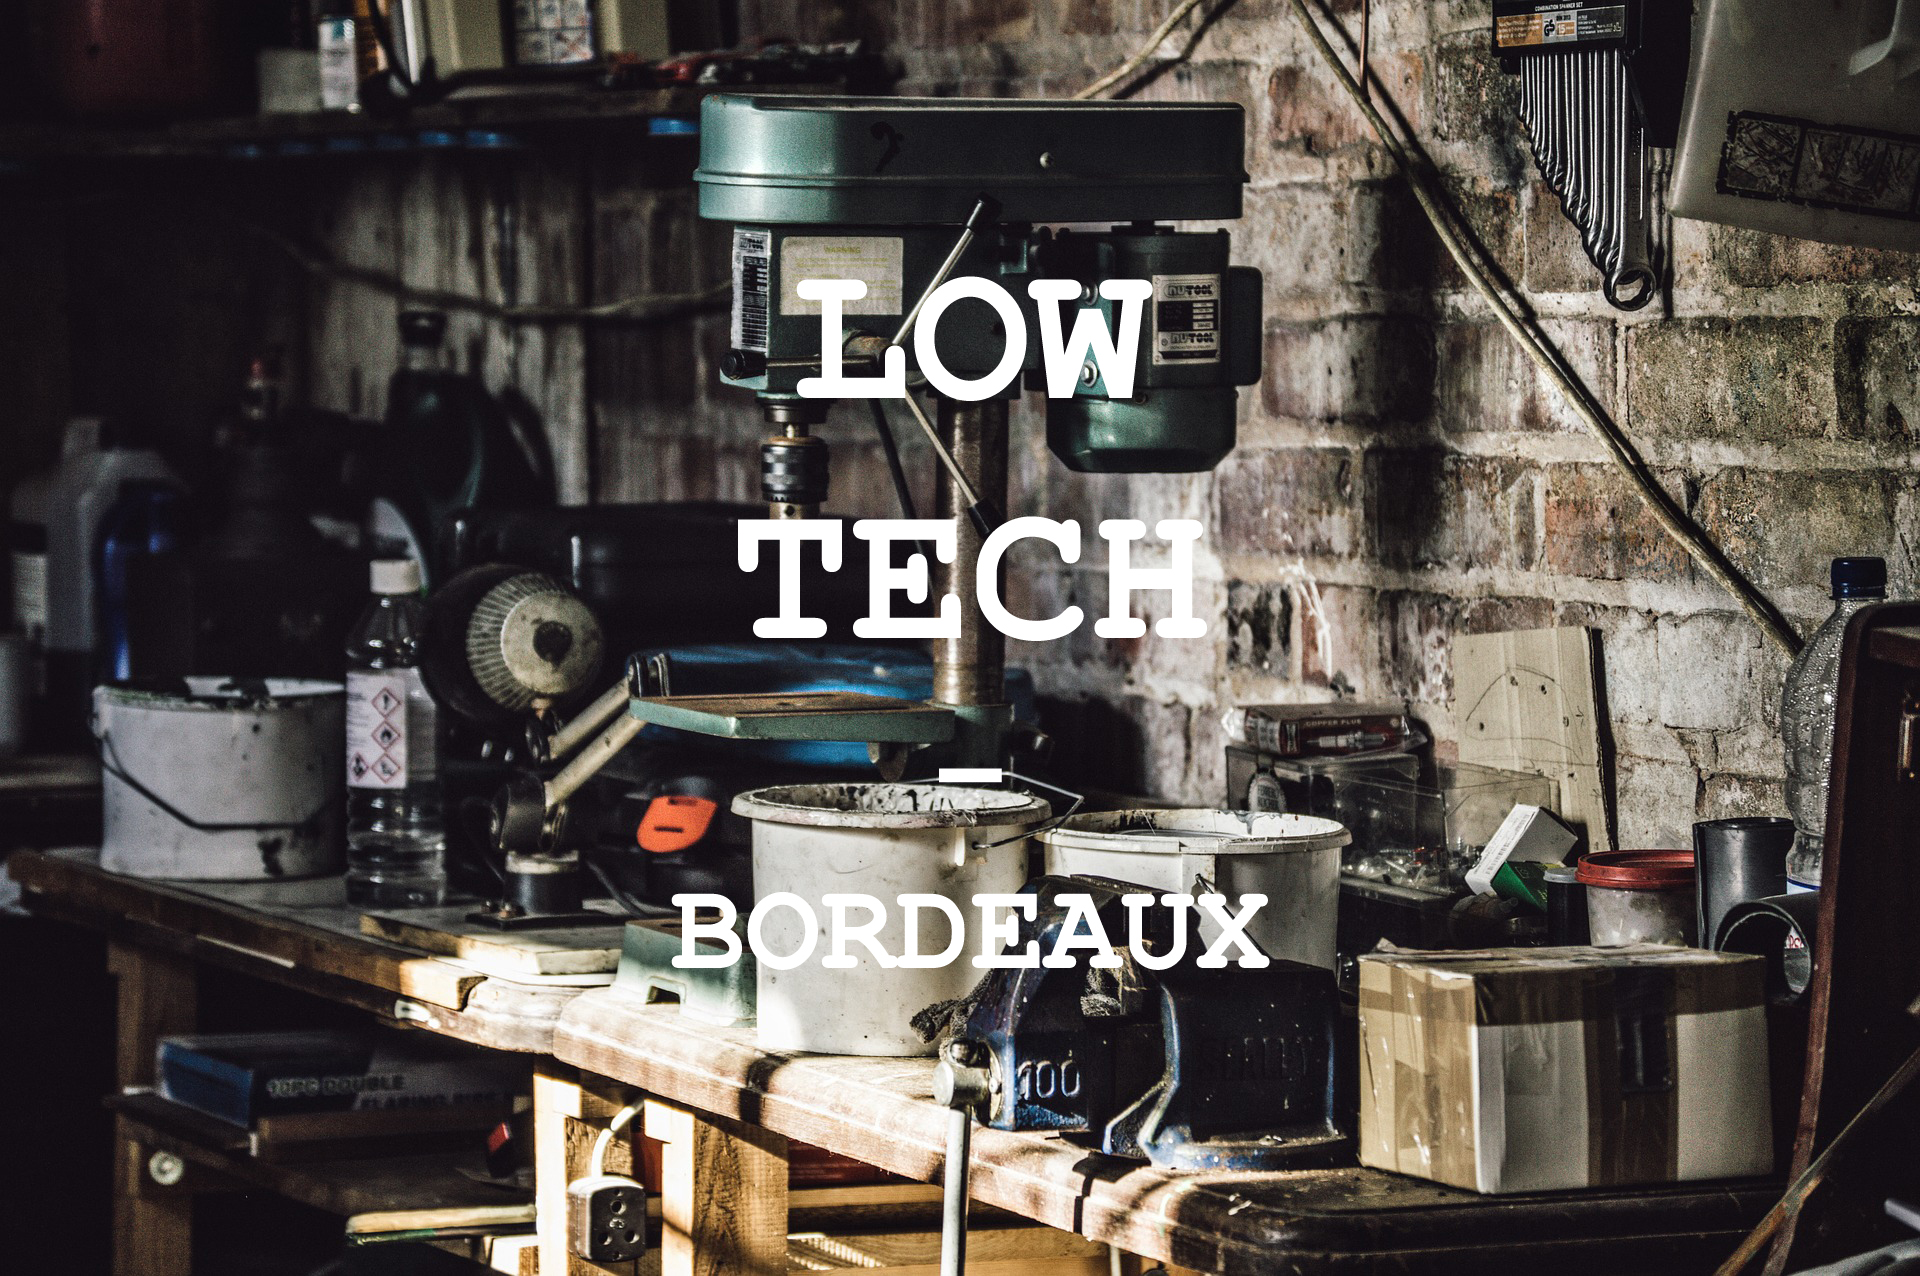 Group-Low Tech Bordeaux drill-1839030 1920.jpg